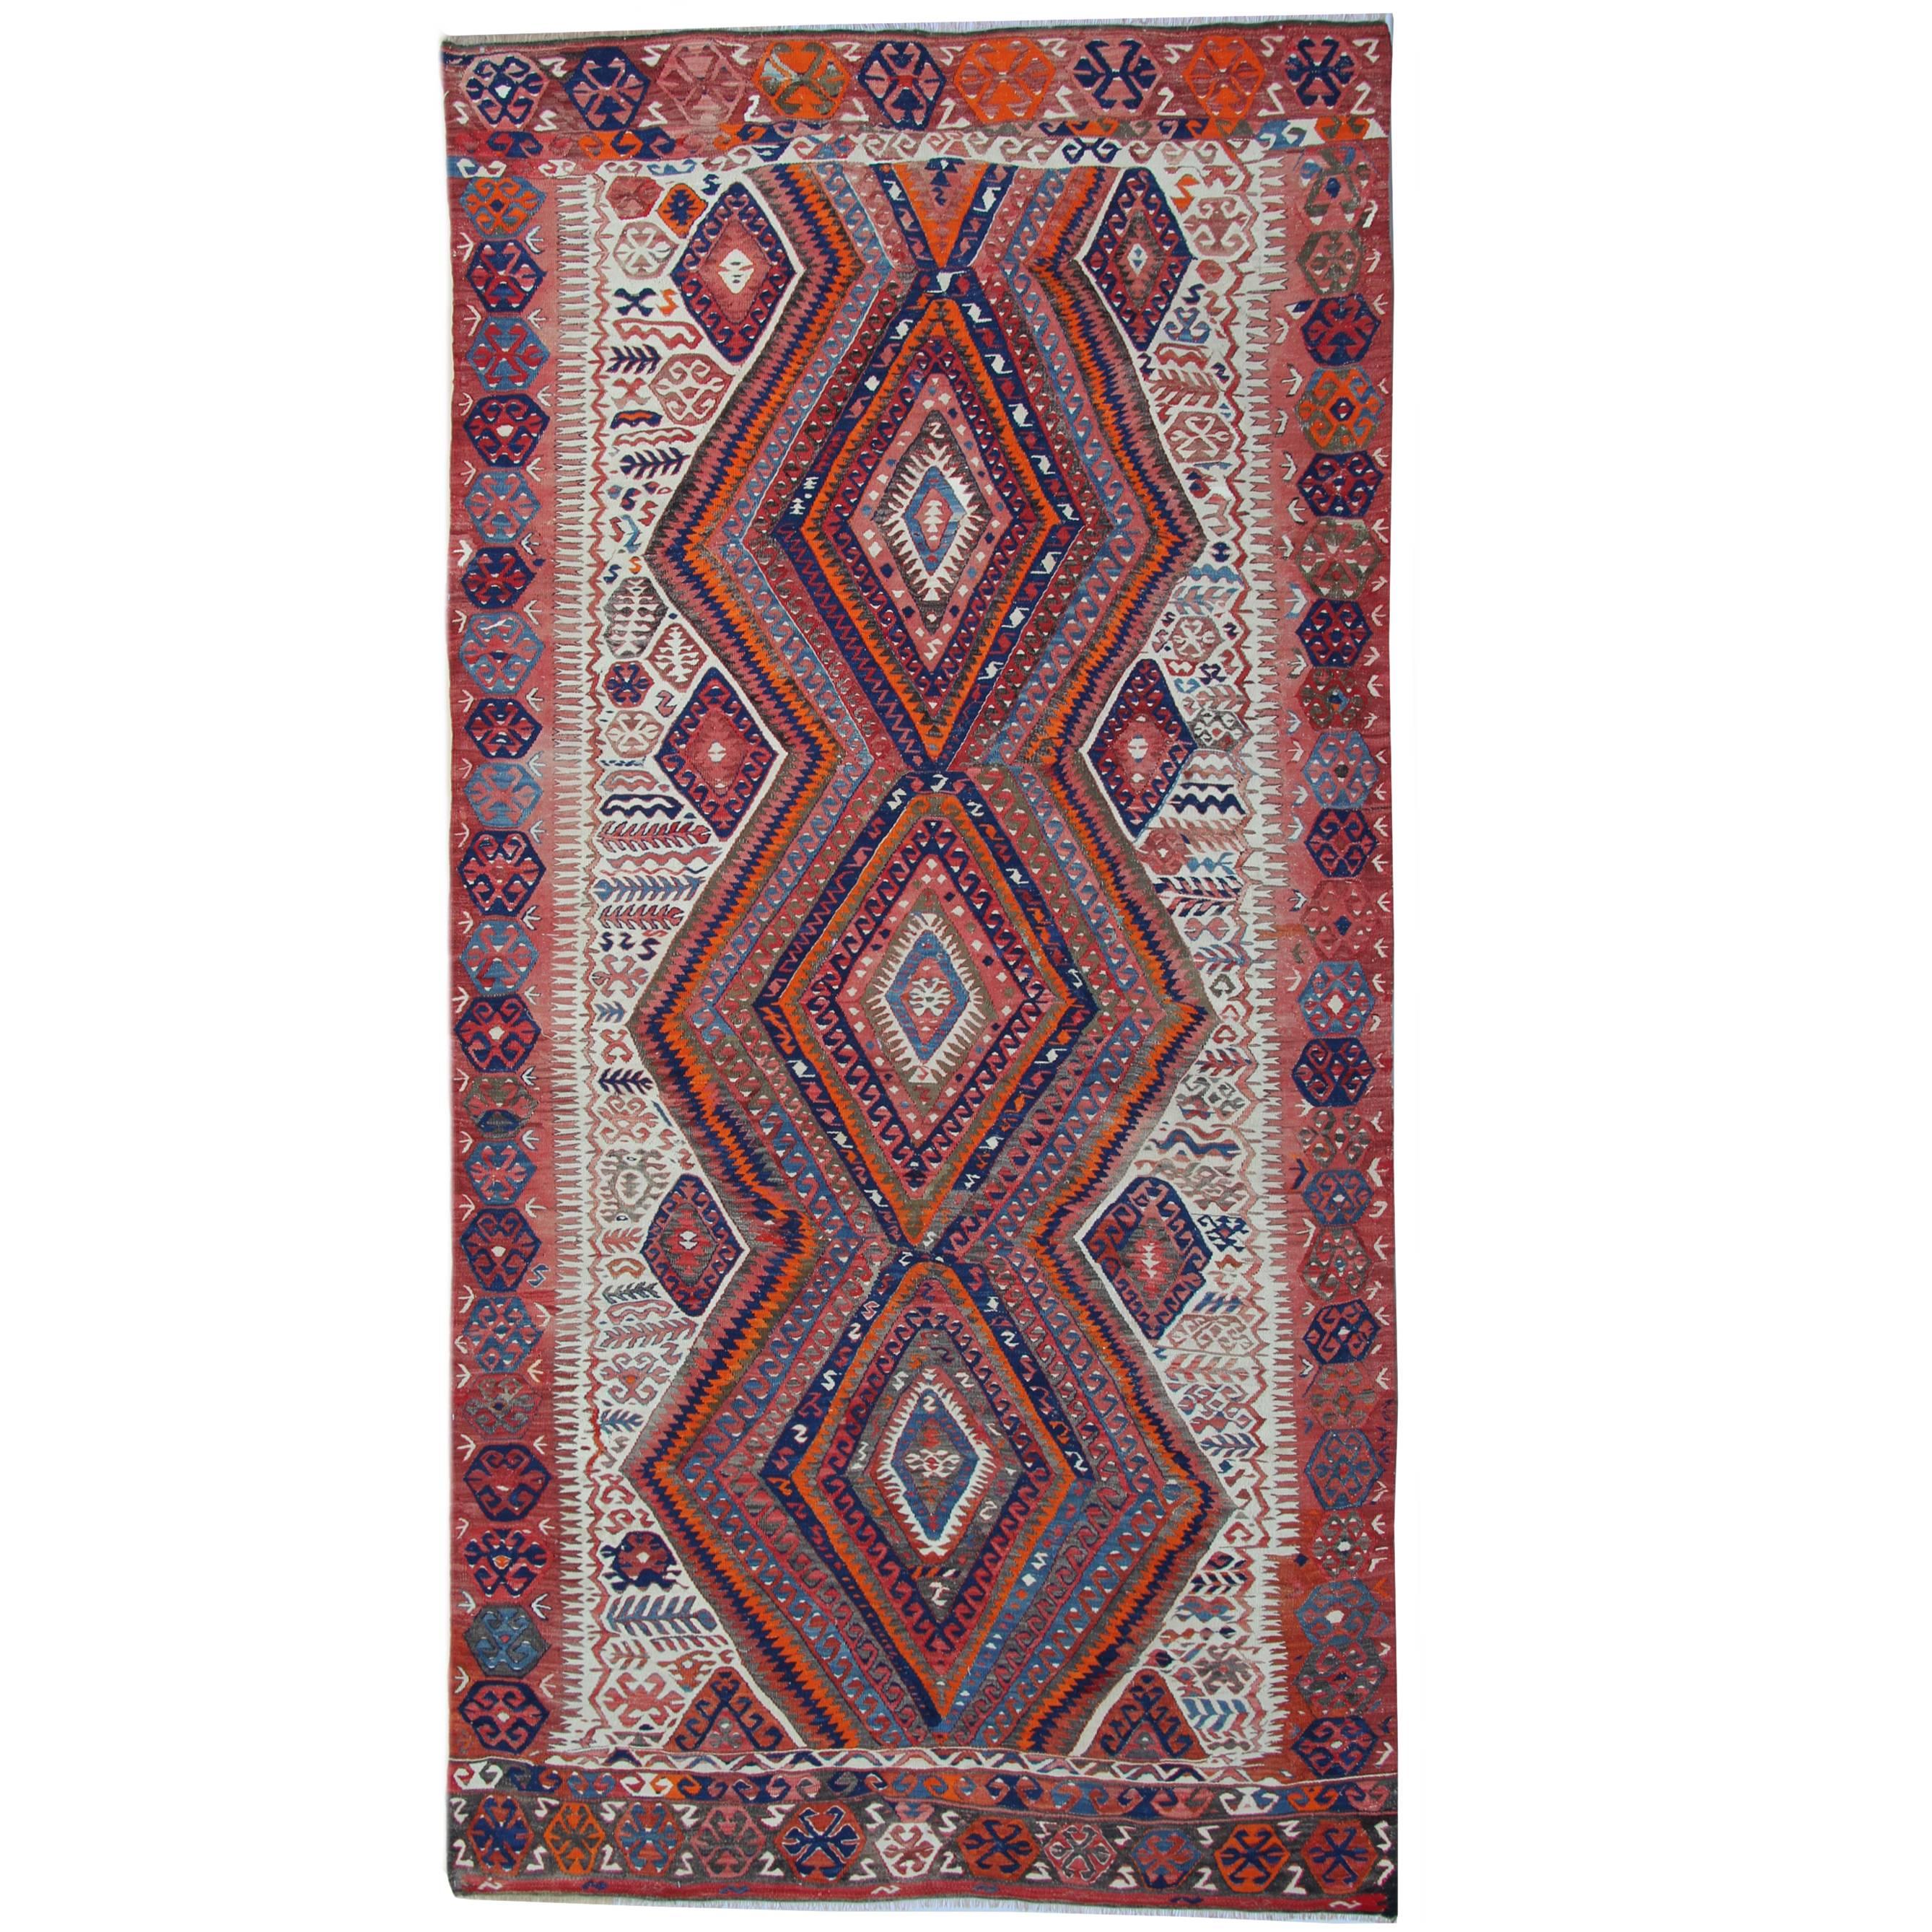 Antique Rugs Turkish Handmade Carpet, Kilim Rugs, Oriental Rugs for Sale